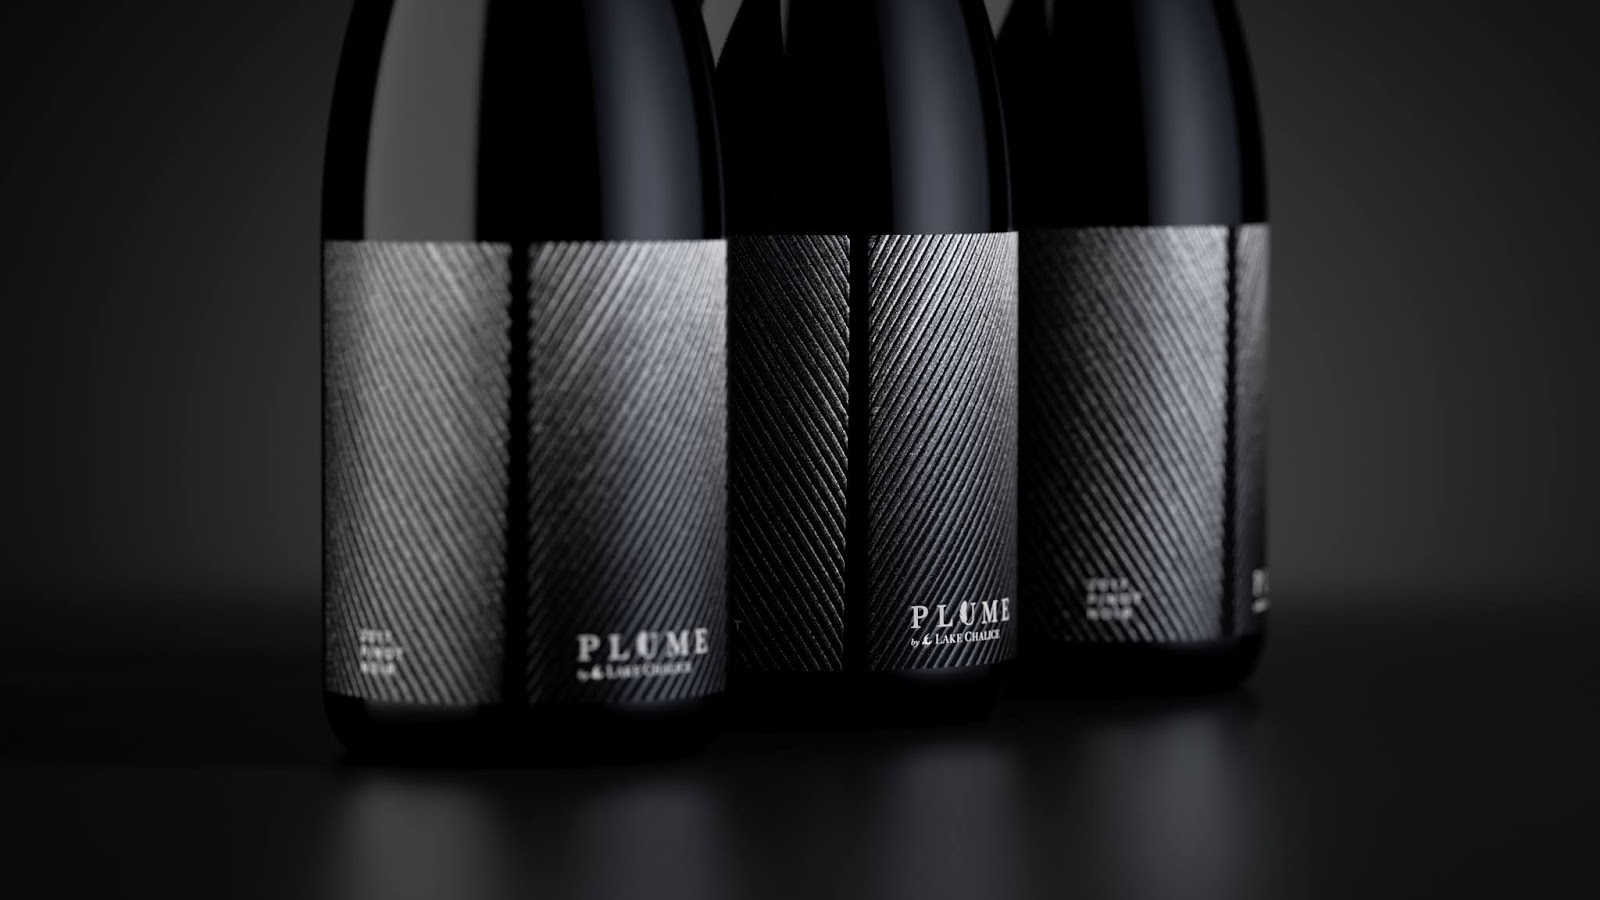 Premium plums tg. Вино la Plume. Premium Wine Новокузнецк. Вино с перышком на этикетке. Дизайн этикетки на премиум вино 2022.